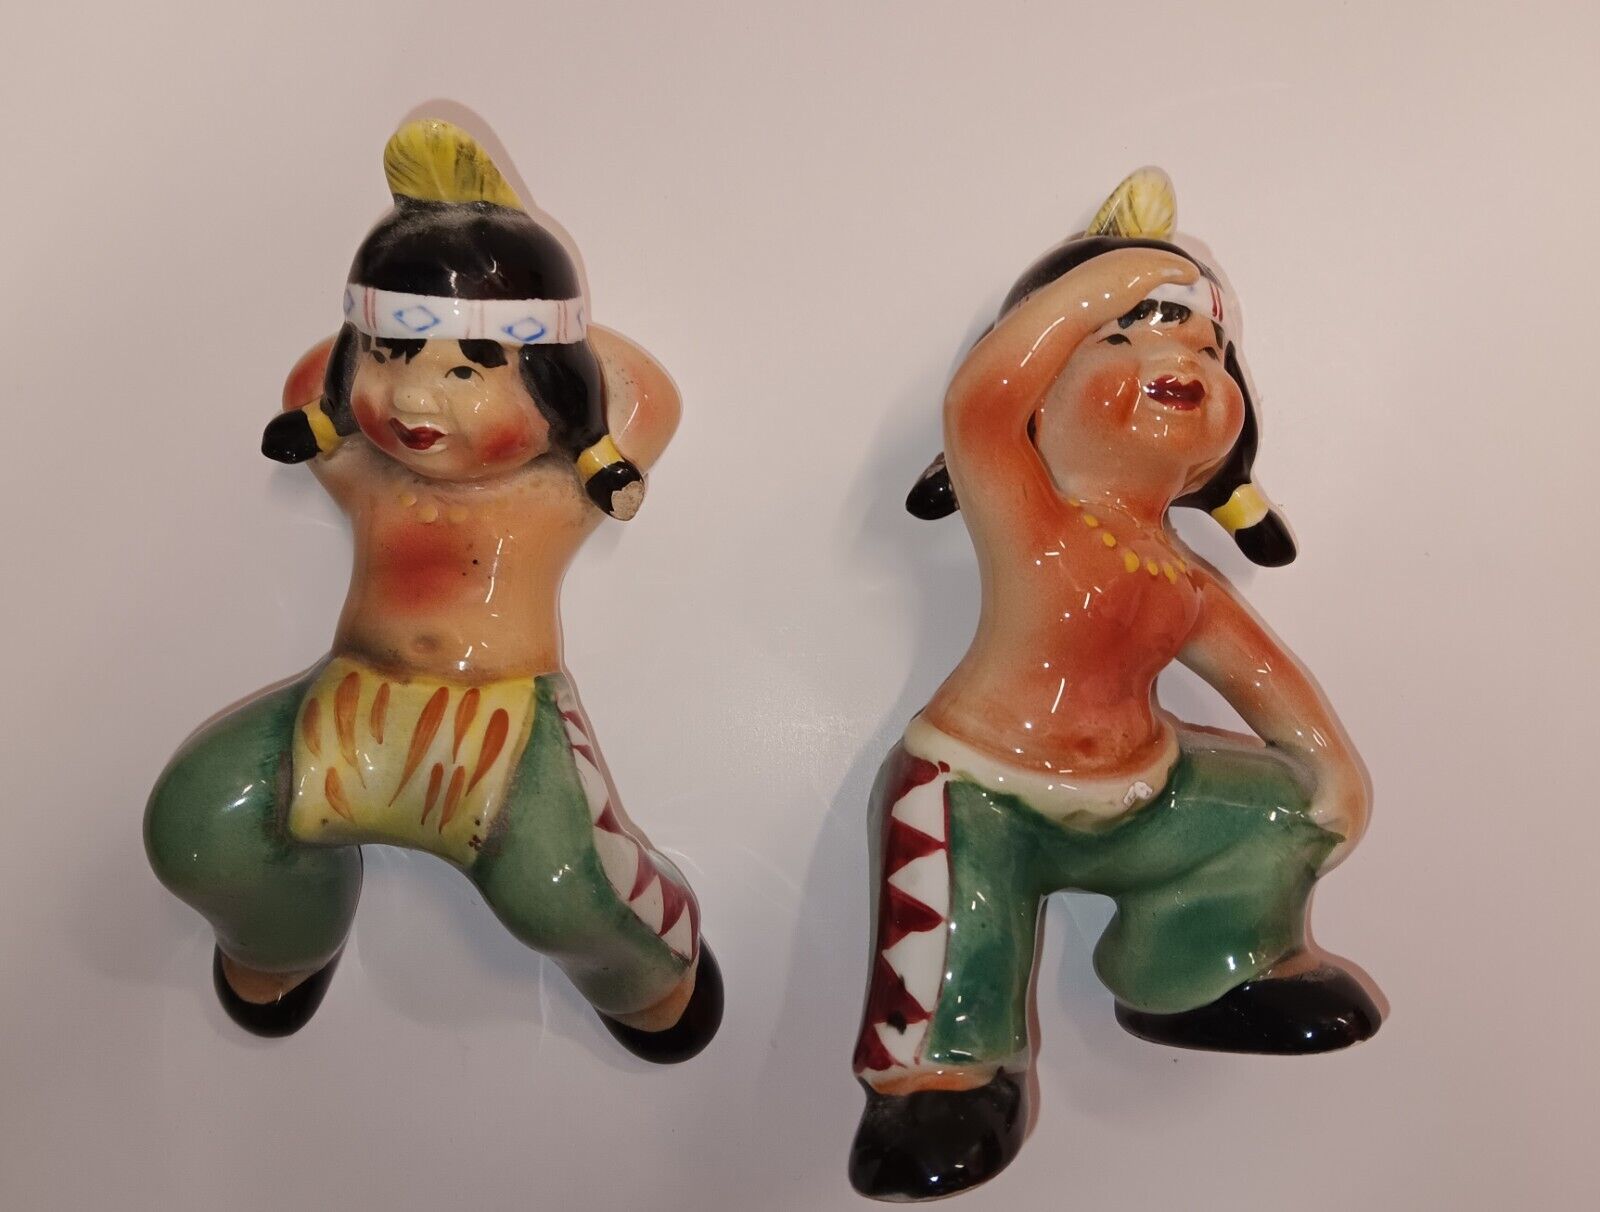 2 Original Ucagco Cermic Native American Children Figurines, 5